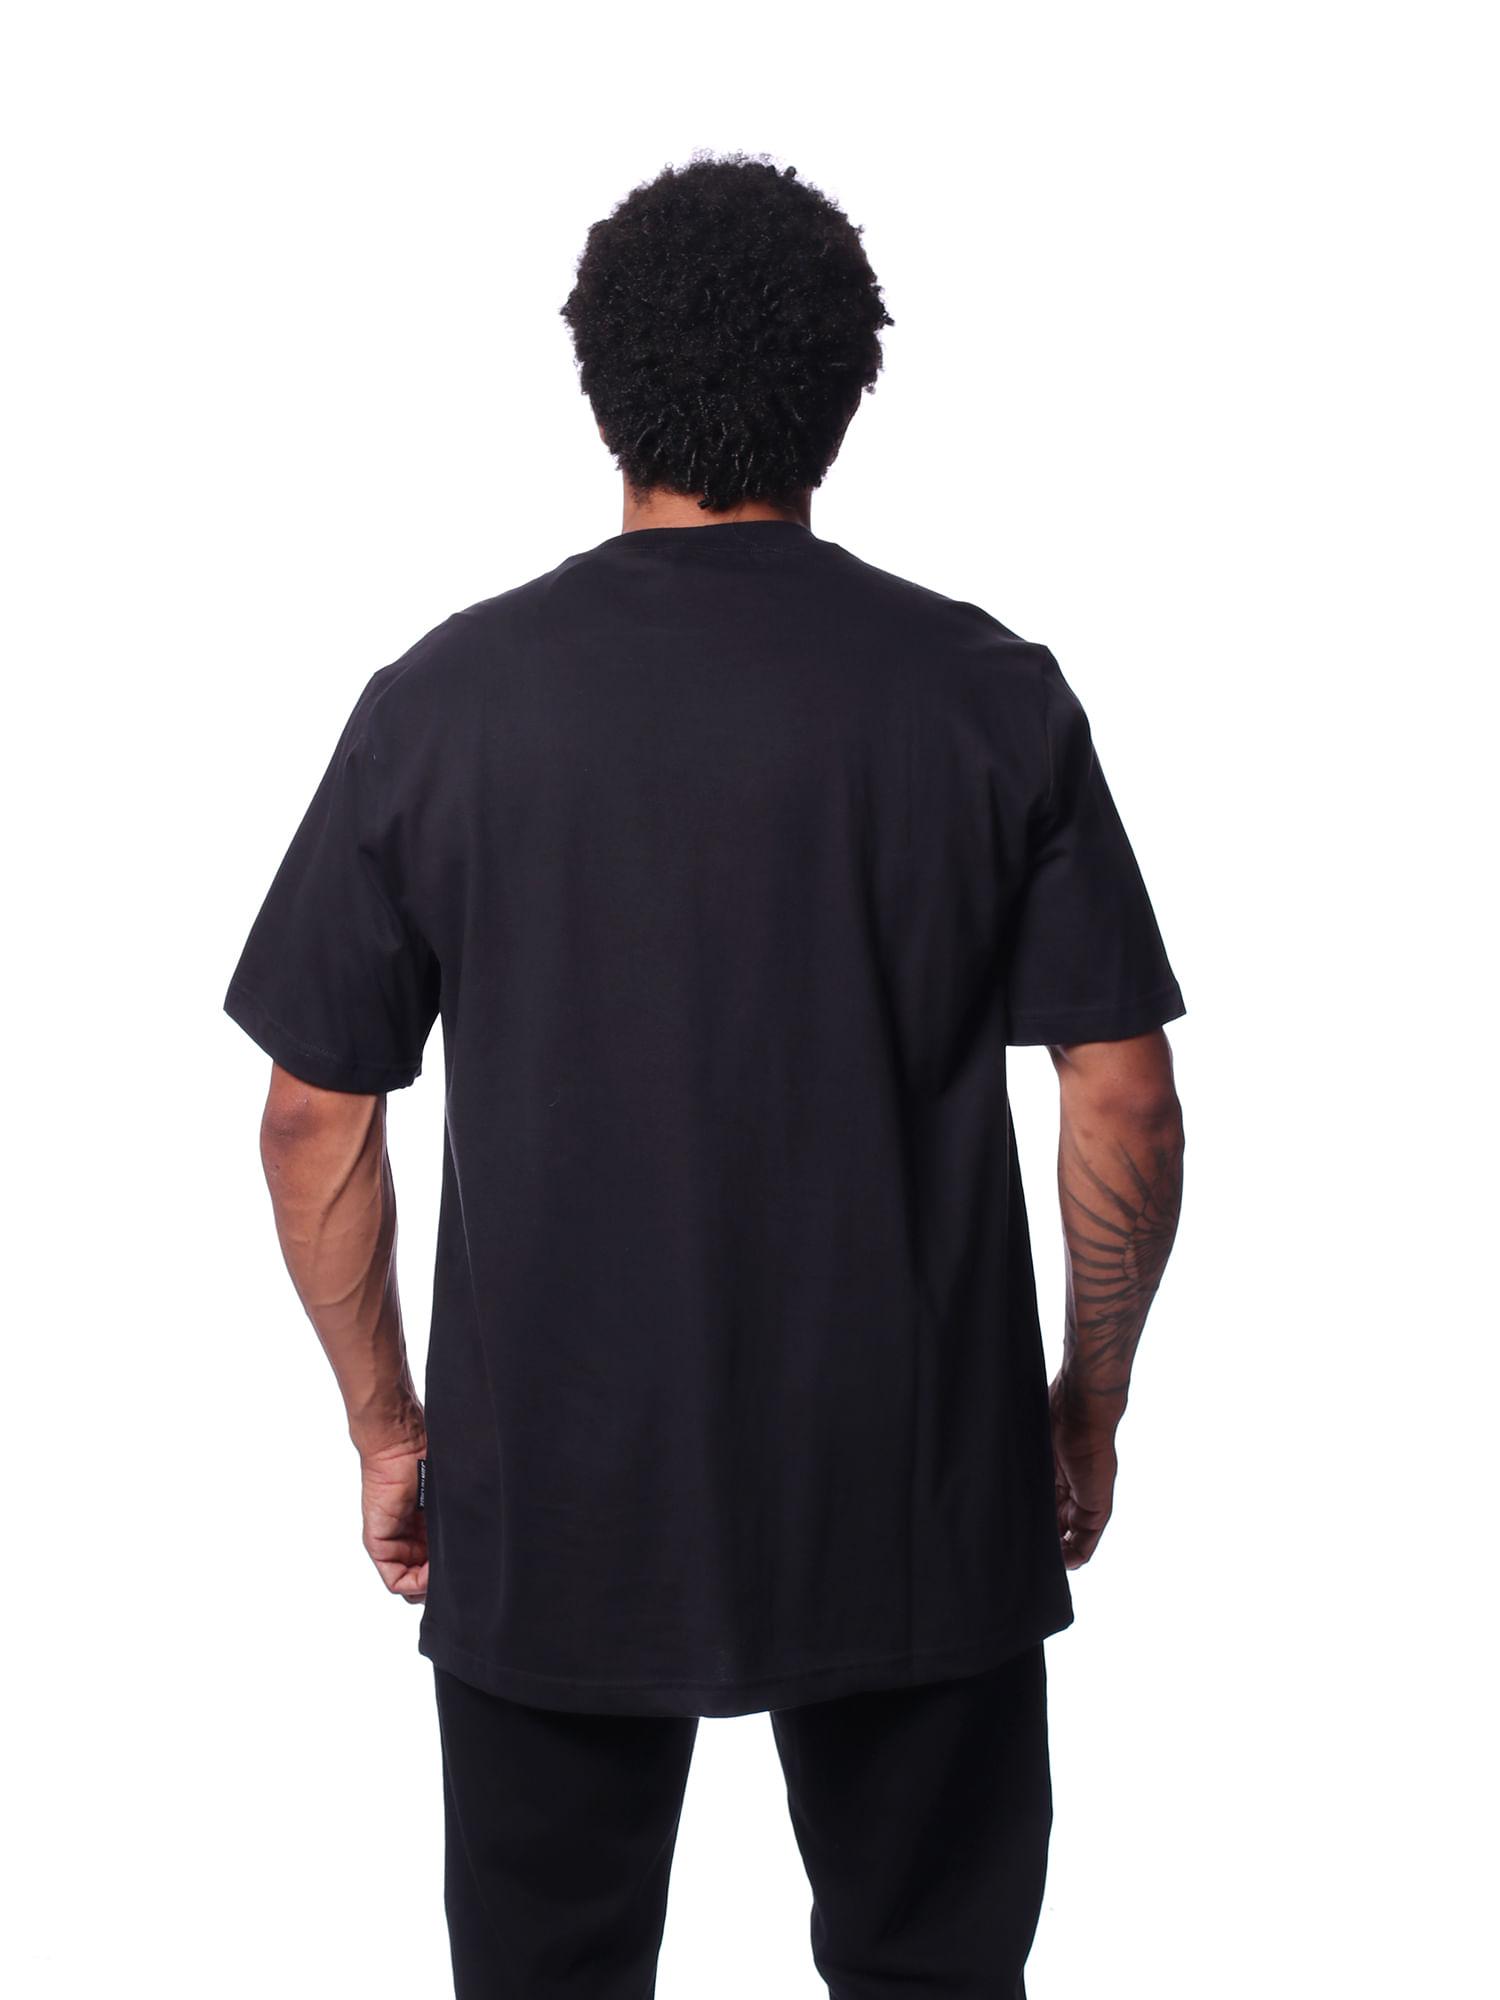 Camiseta-plus-size-santa-cruz-meek-slasher-front-Preto